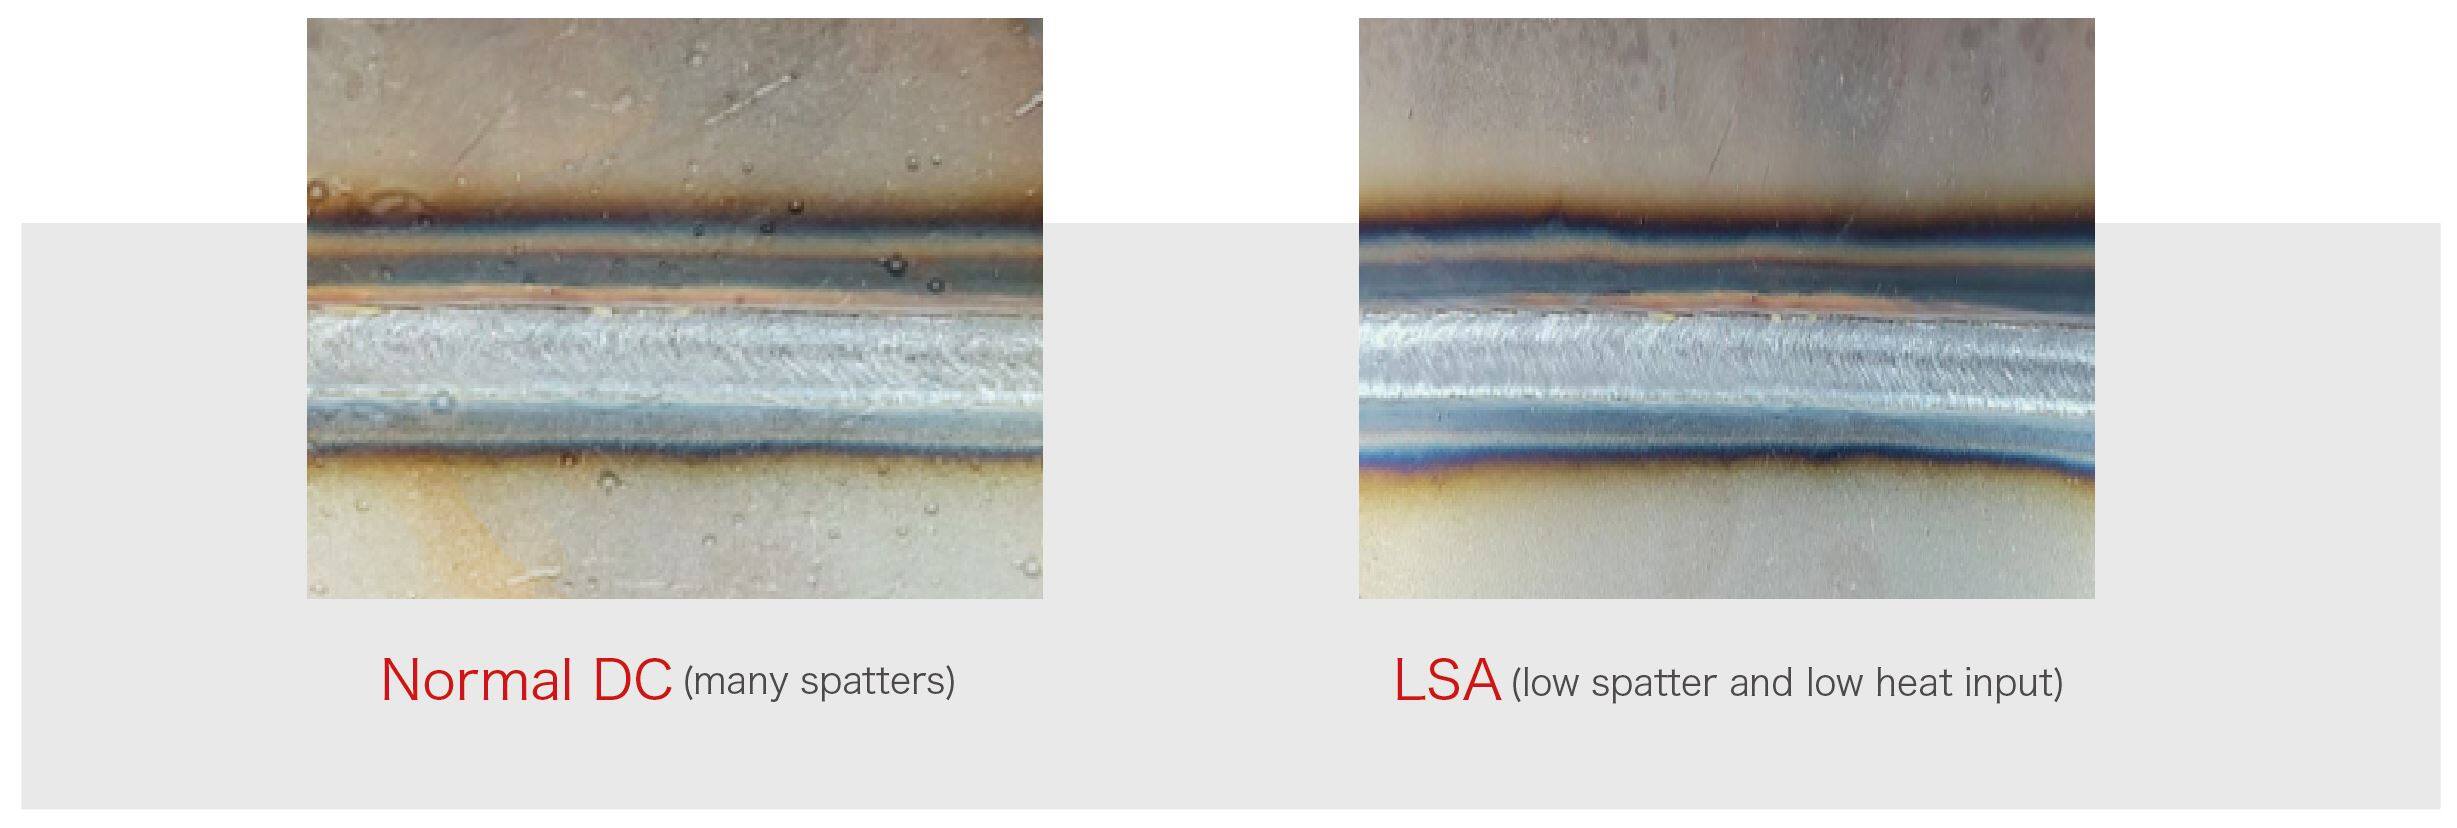 LSA (Low Spatter Arc by Software Algorithm)